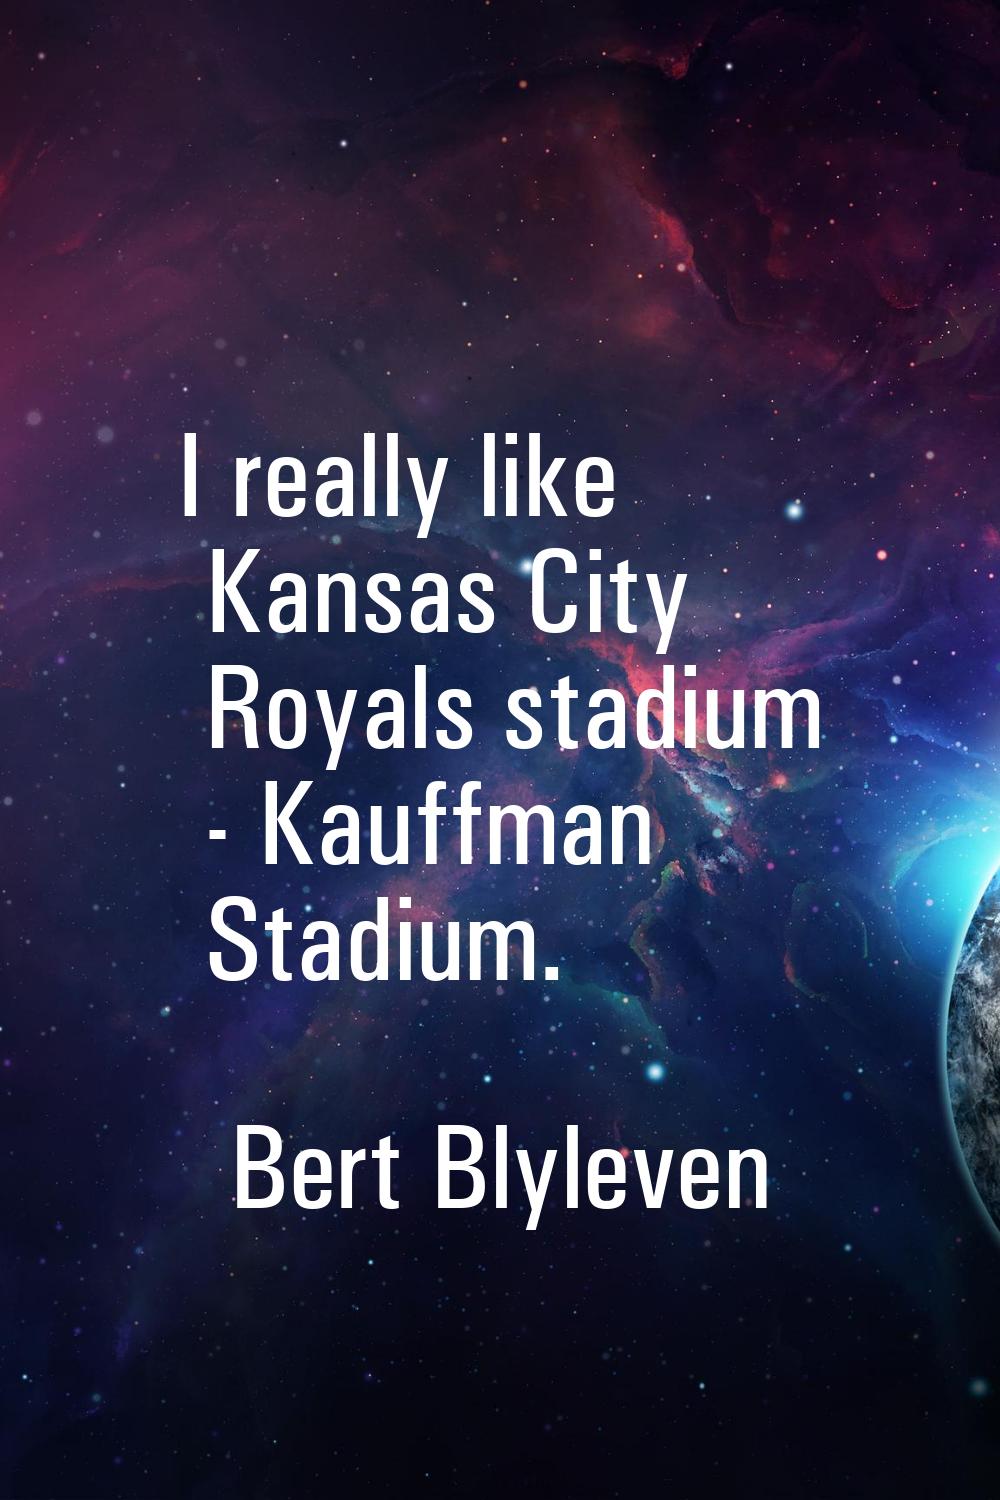 I really like Kansas City Royals stadium - Kauffman Stadium.